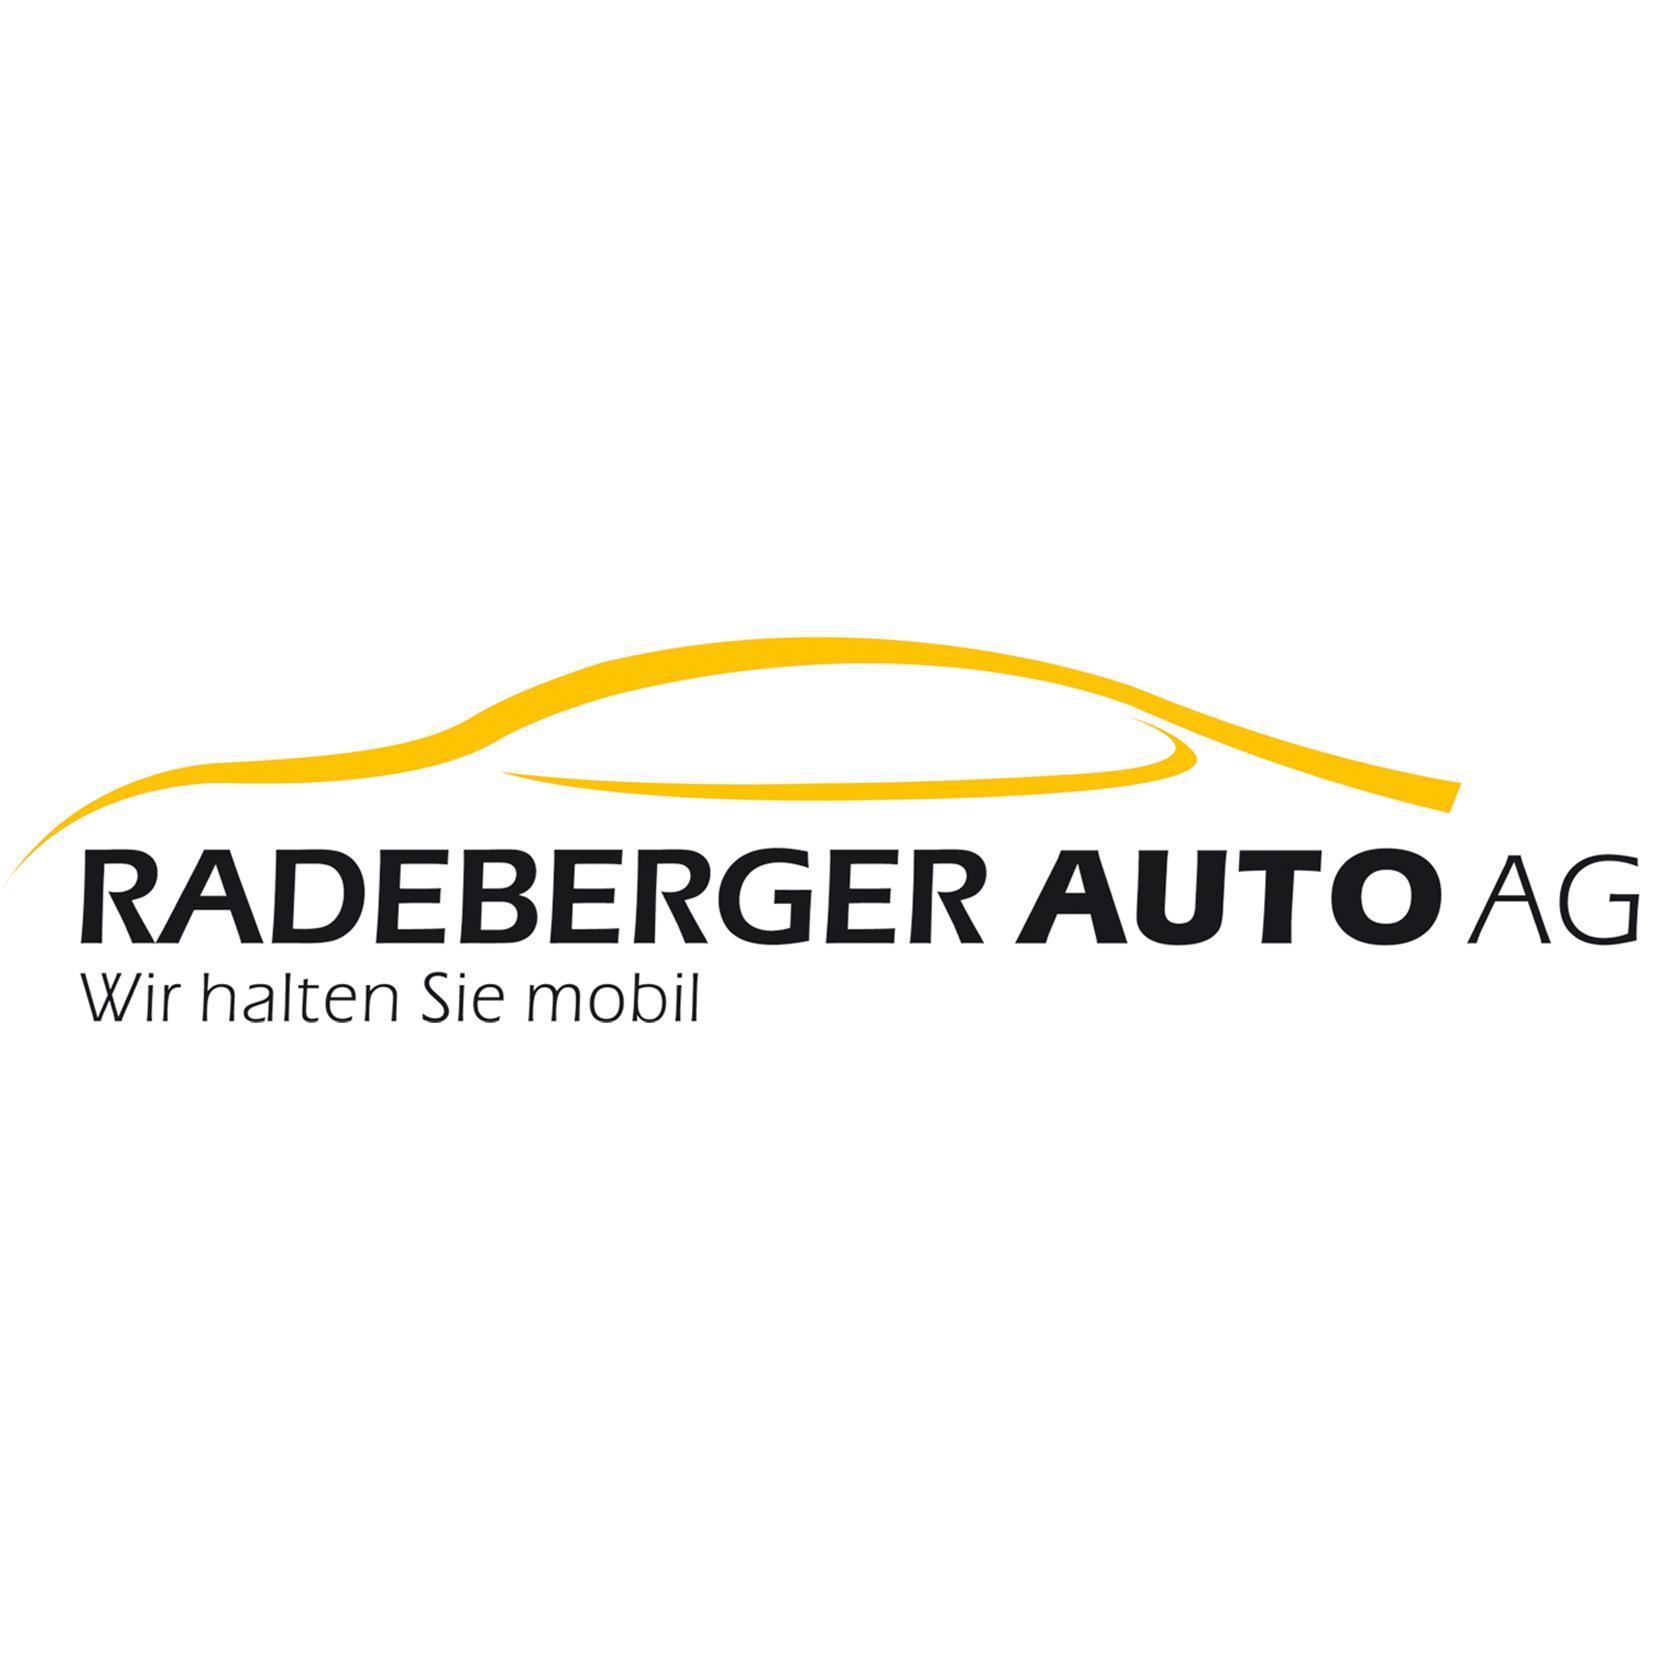 Radeberger Auto AG in Radeberg - Logo